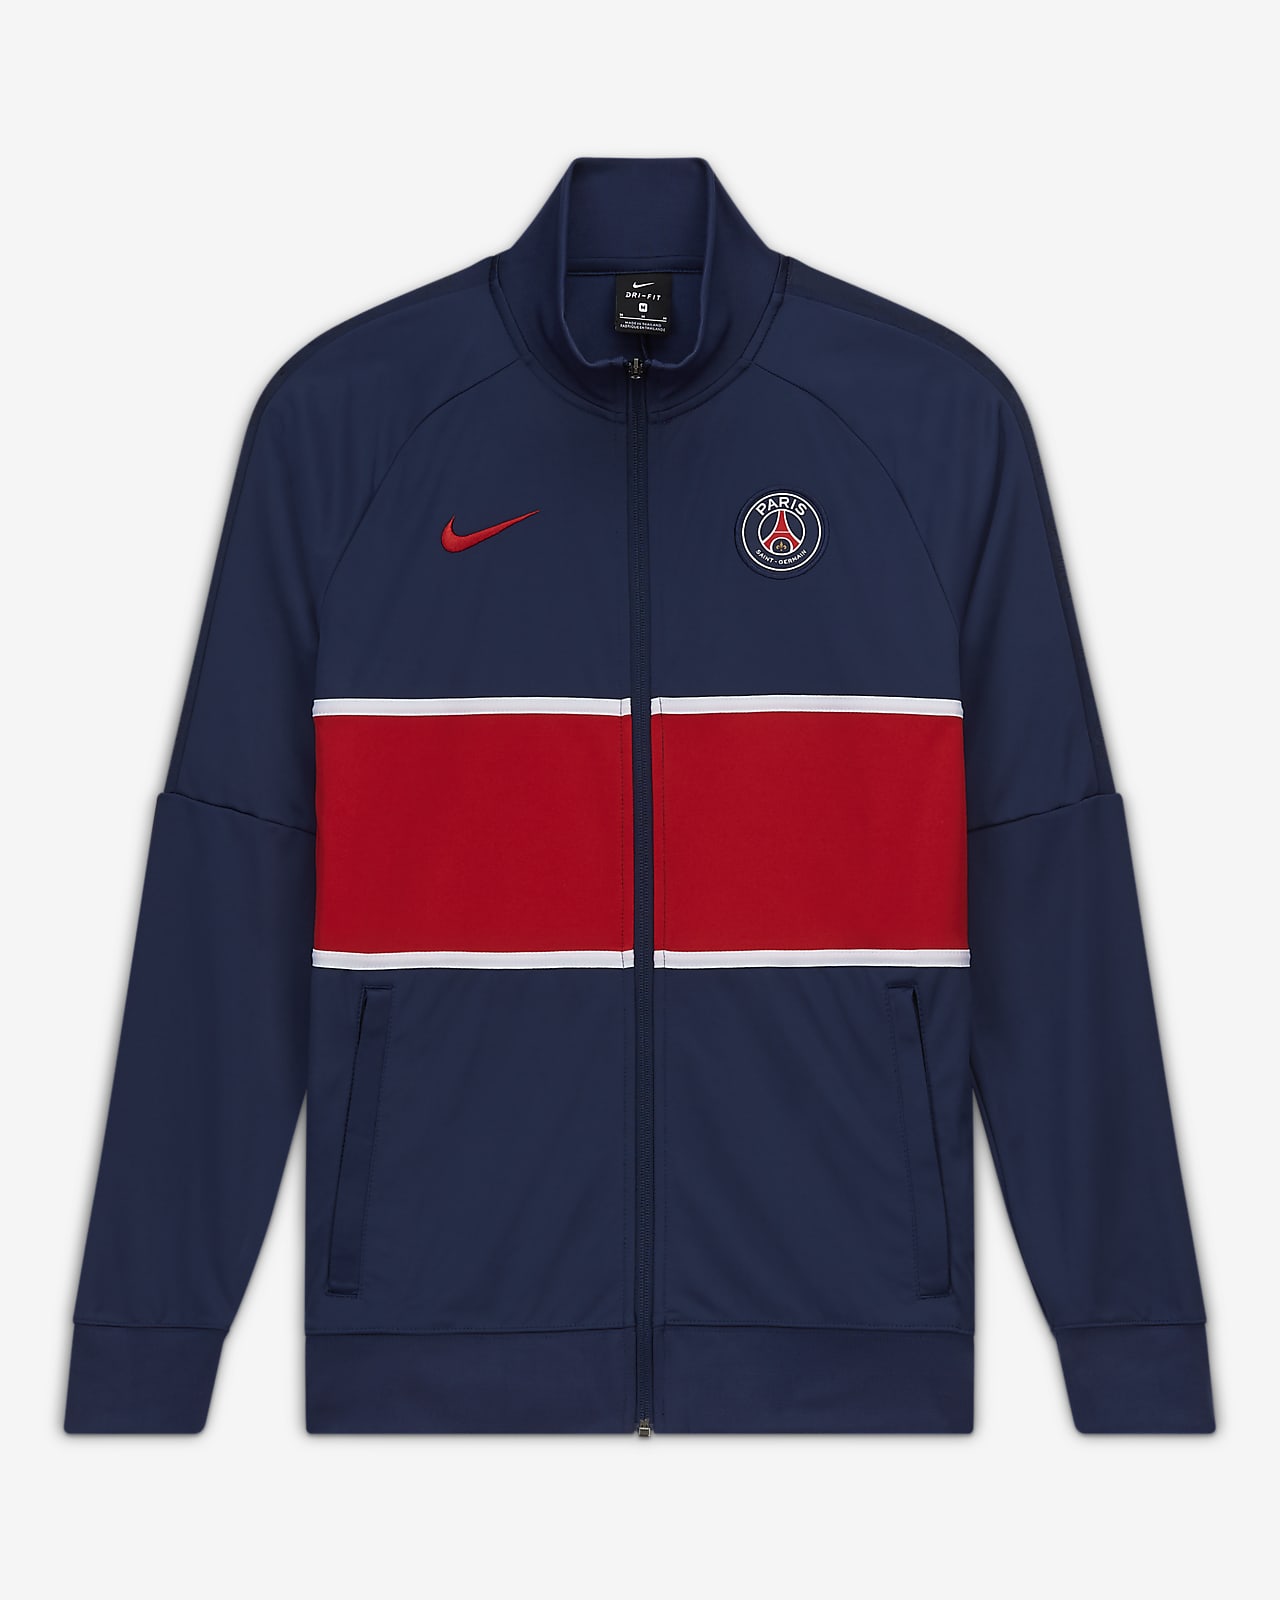 Paris Saint-Germain Men's Track Jacket. Nike SG